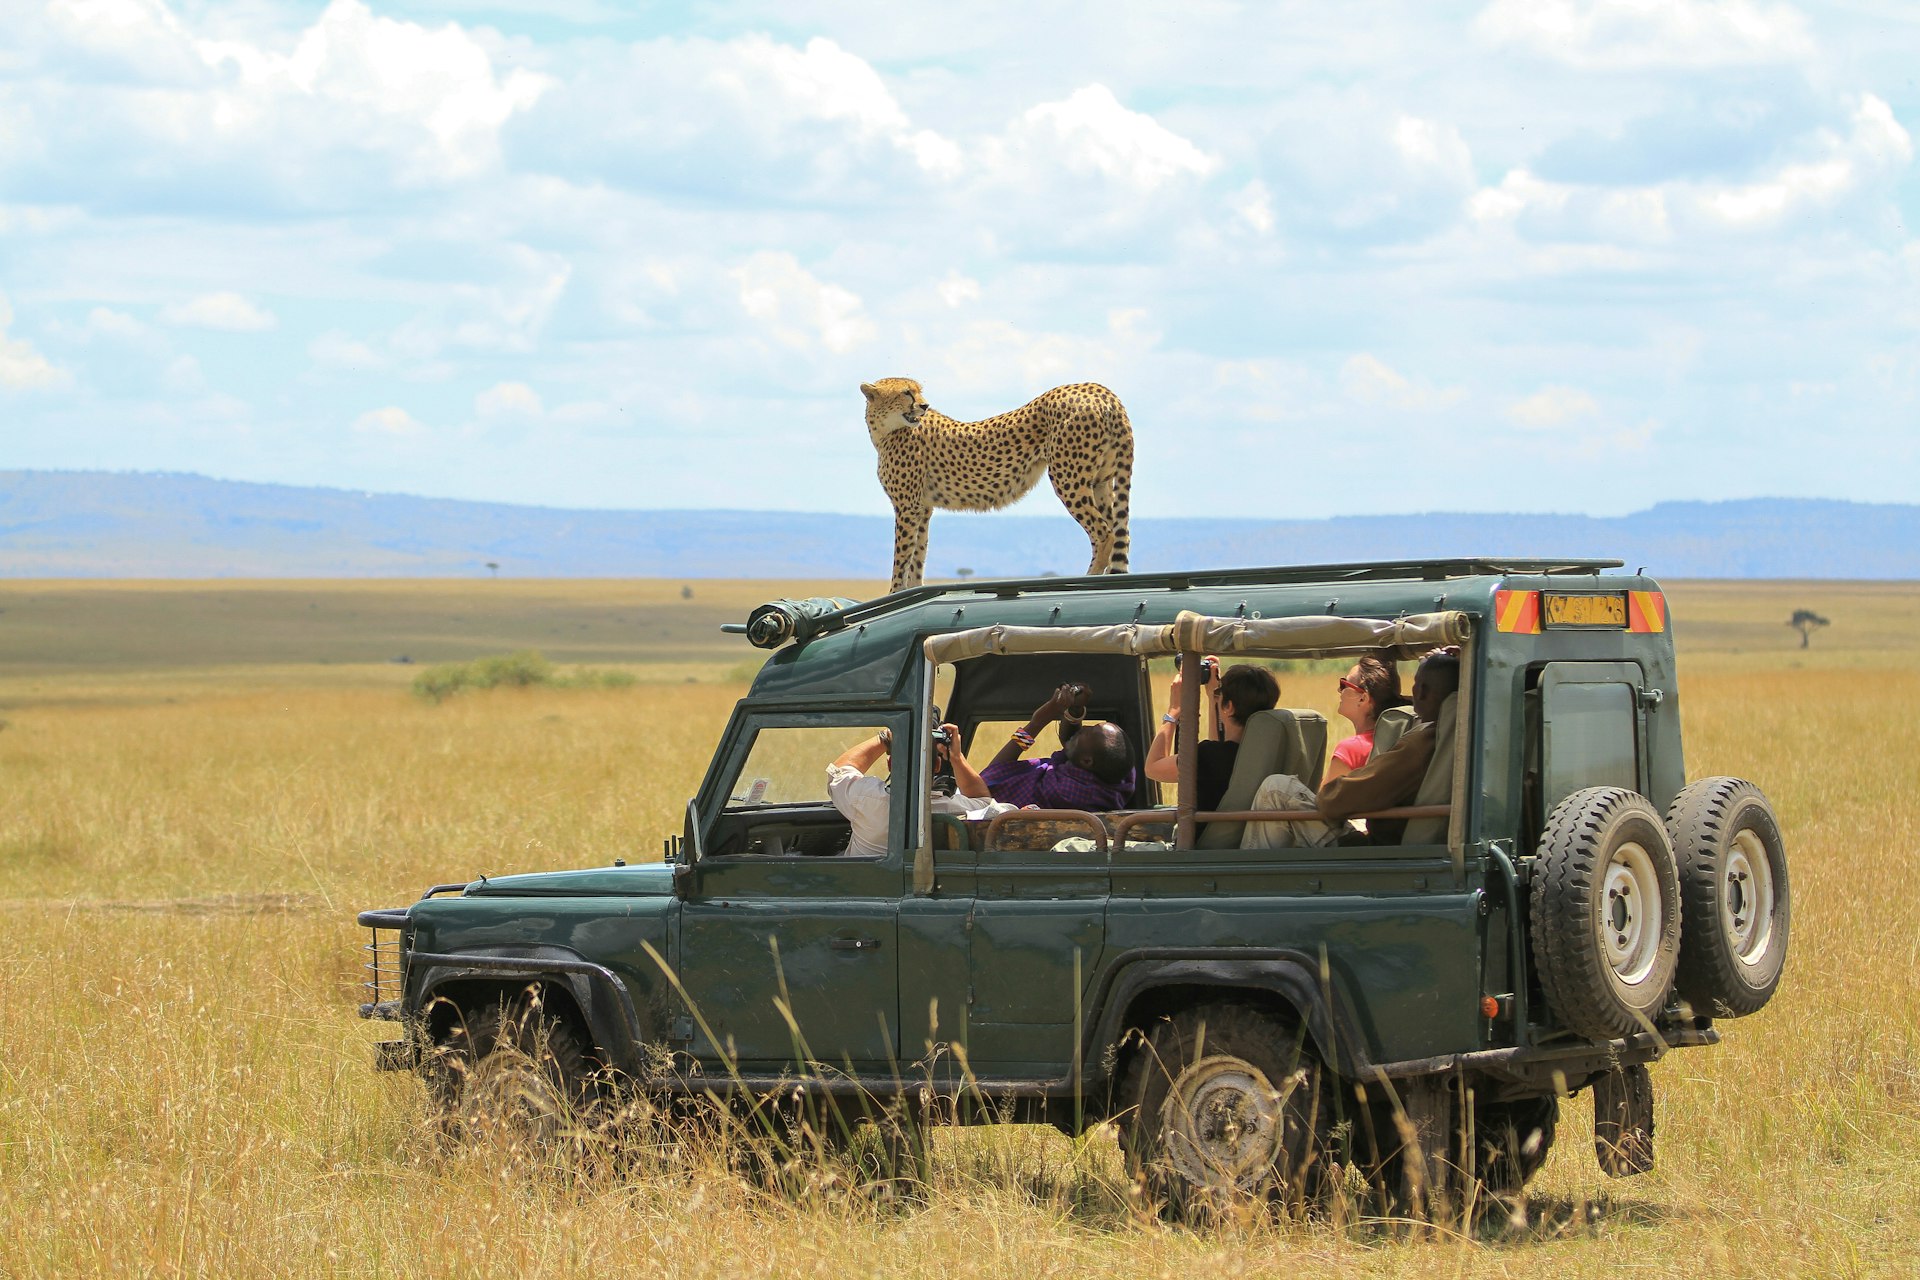 Cheetah on top of a jeep in the Masai Mara, Kenya